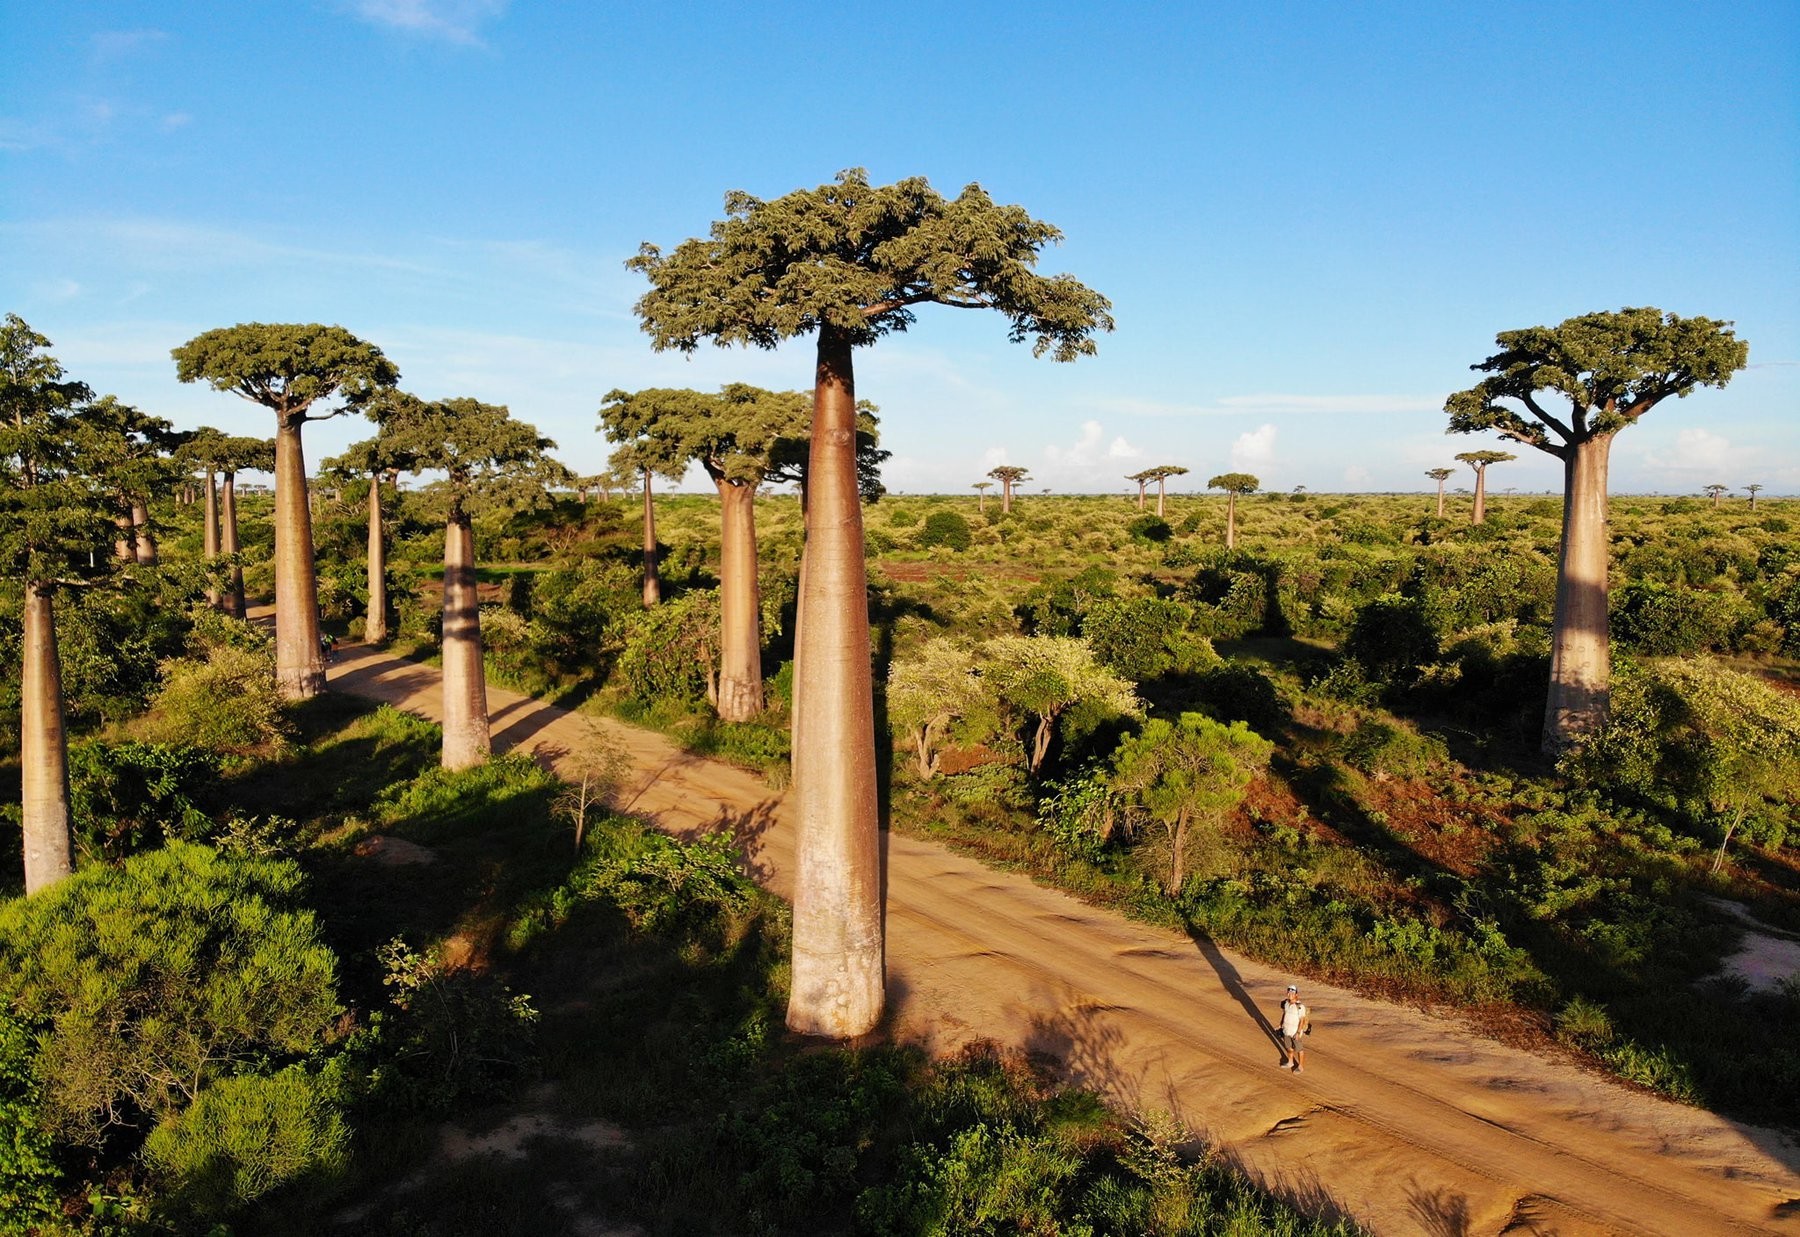 cay-baobabs-bieu-tuong-cua-madagascar-1-1711202643.jpg